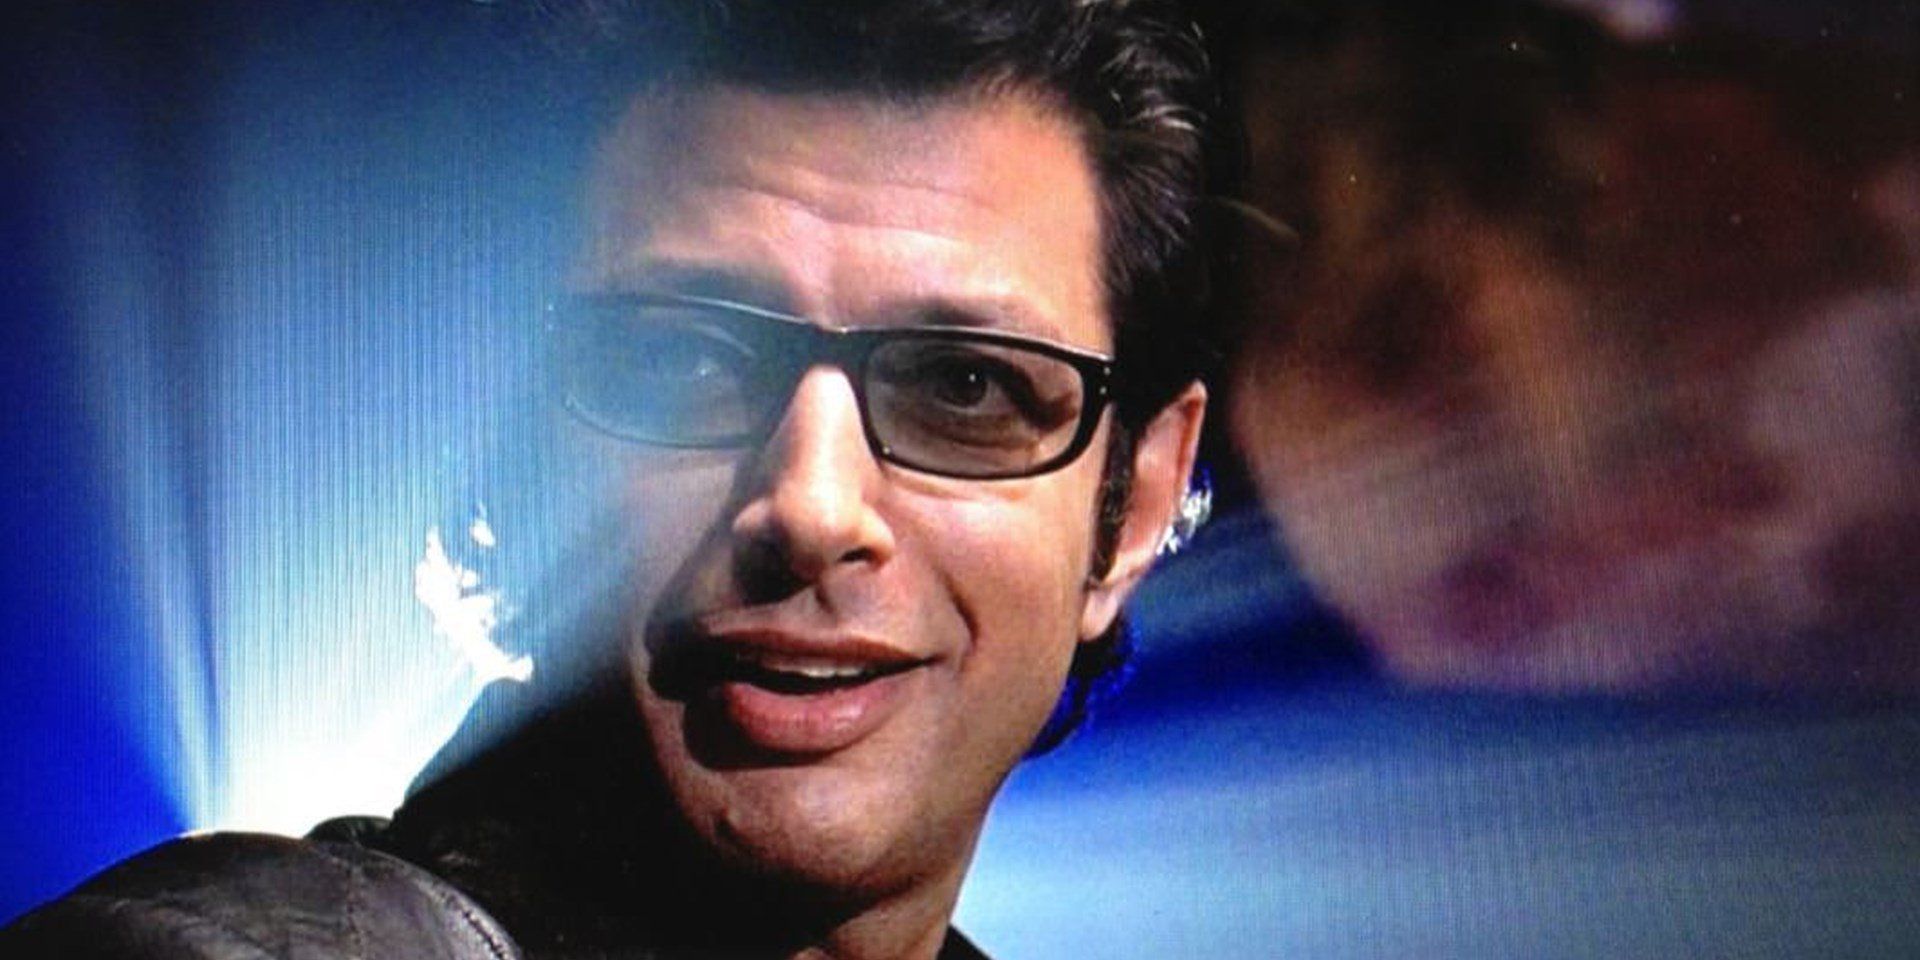 Jeff Goldblum as a smiling Dr. Ian Malcolm in Jurassic Park